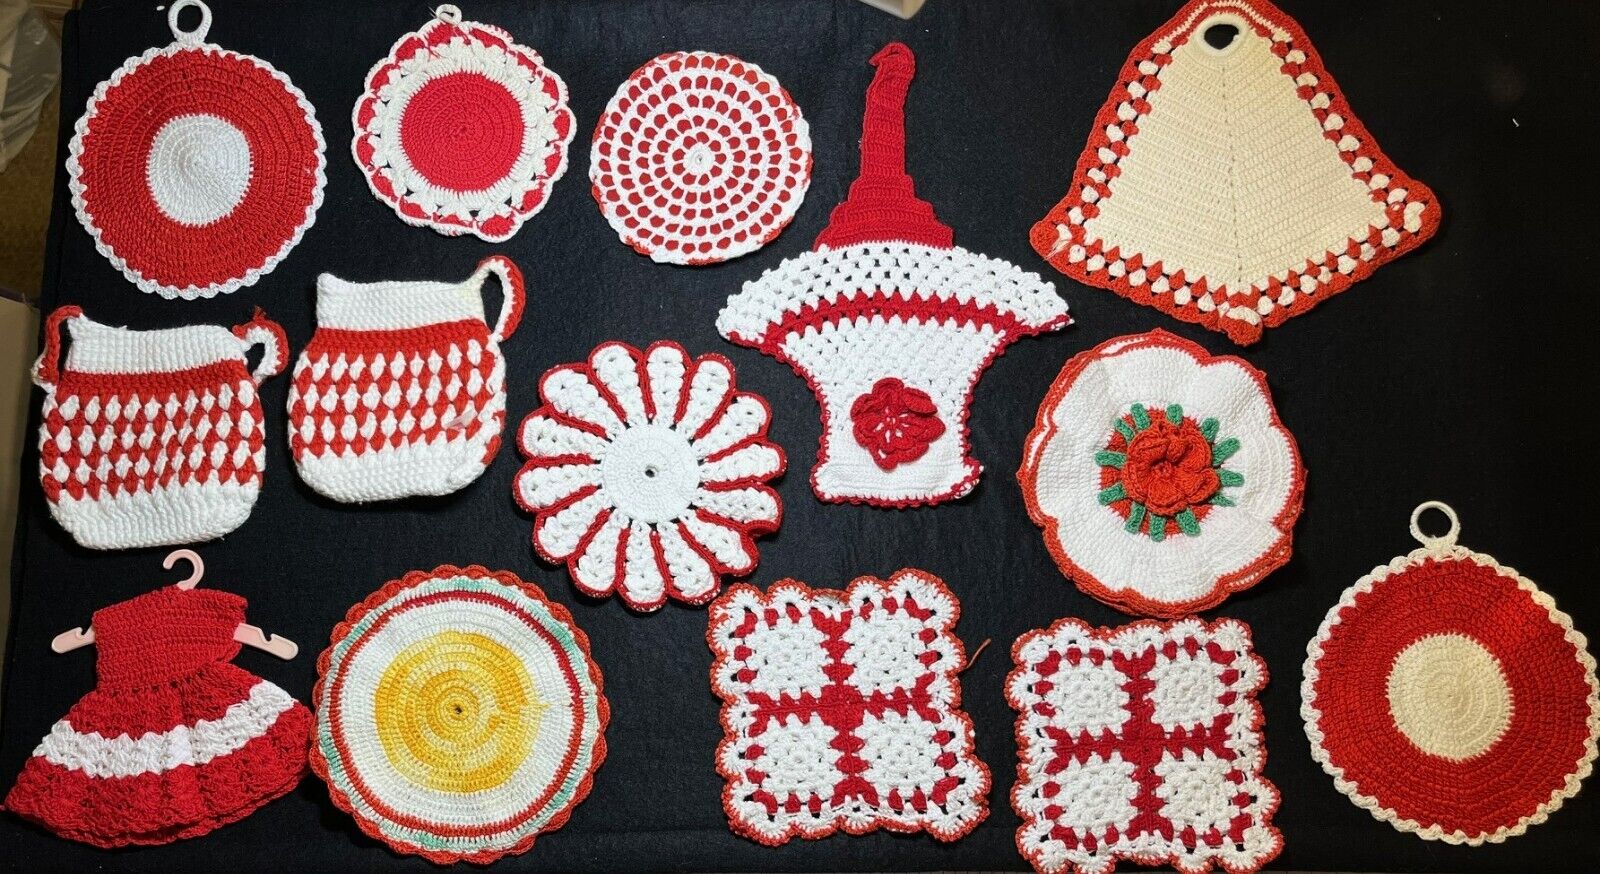 Lot of 14 Vintage Red & White Crocheted Potholders